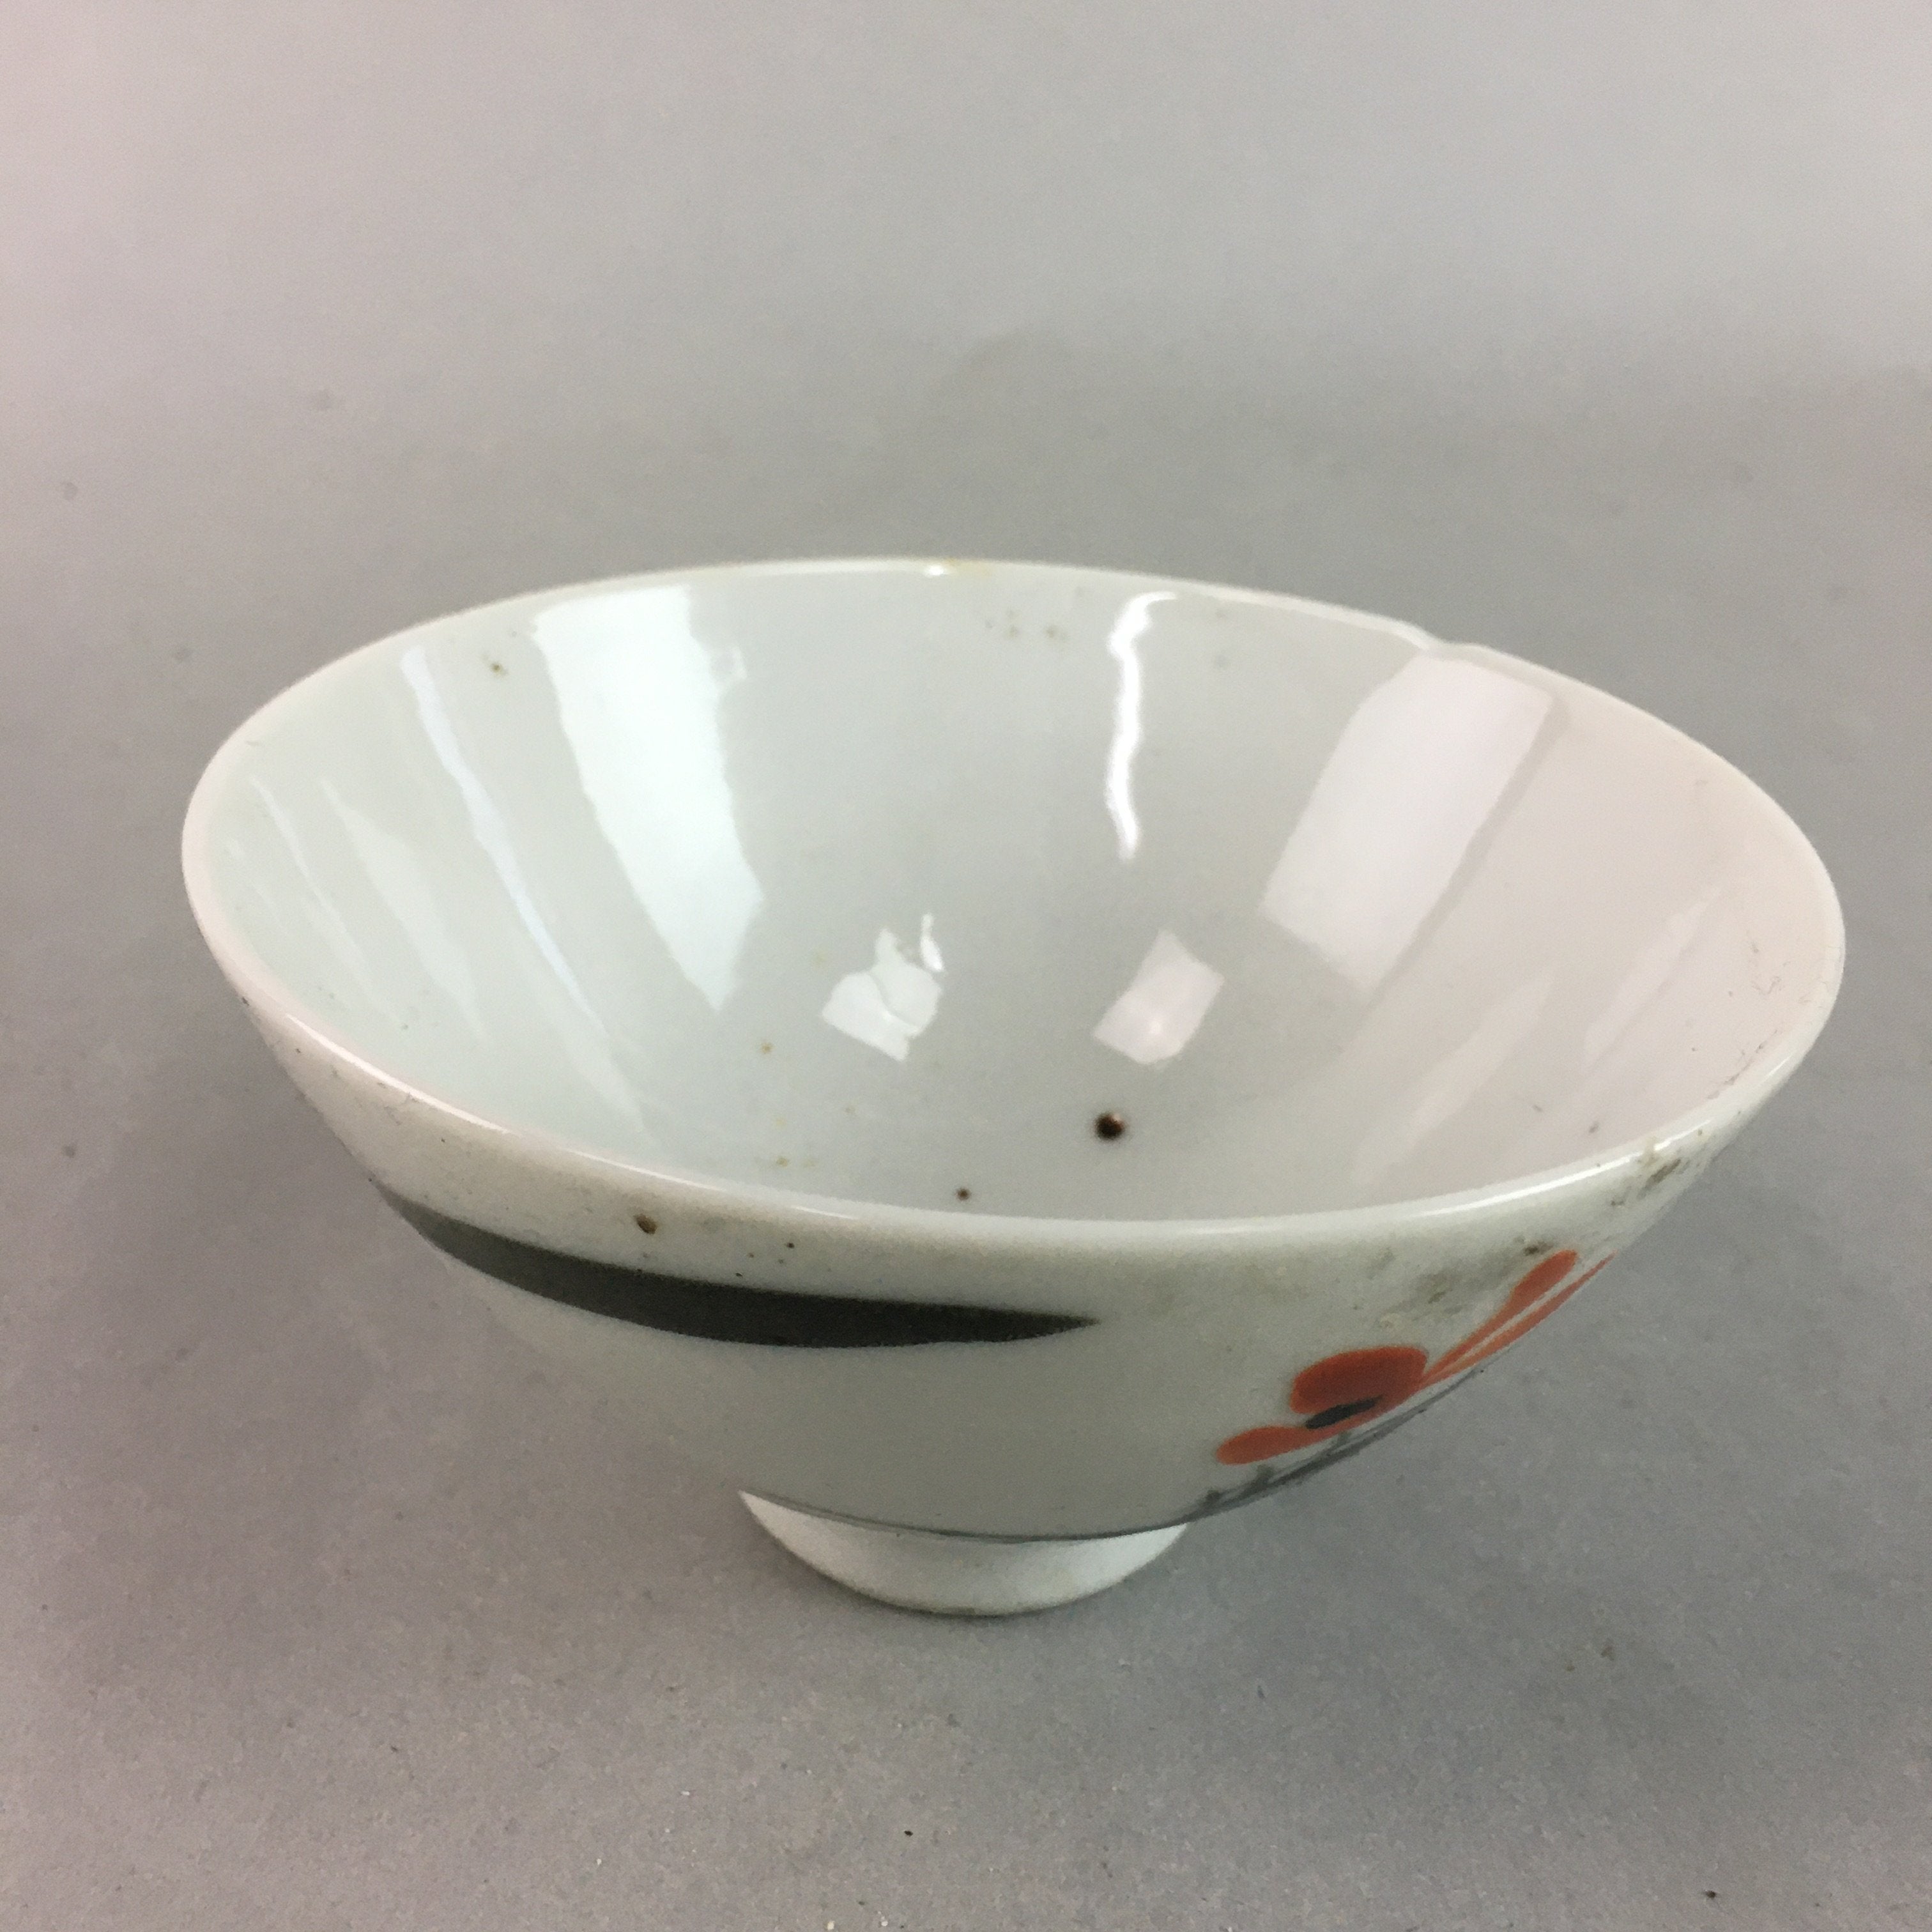 Japanese Porcelain Rice Bowl Vtg Chawan Red Black Flower Leaf PP221